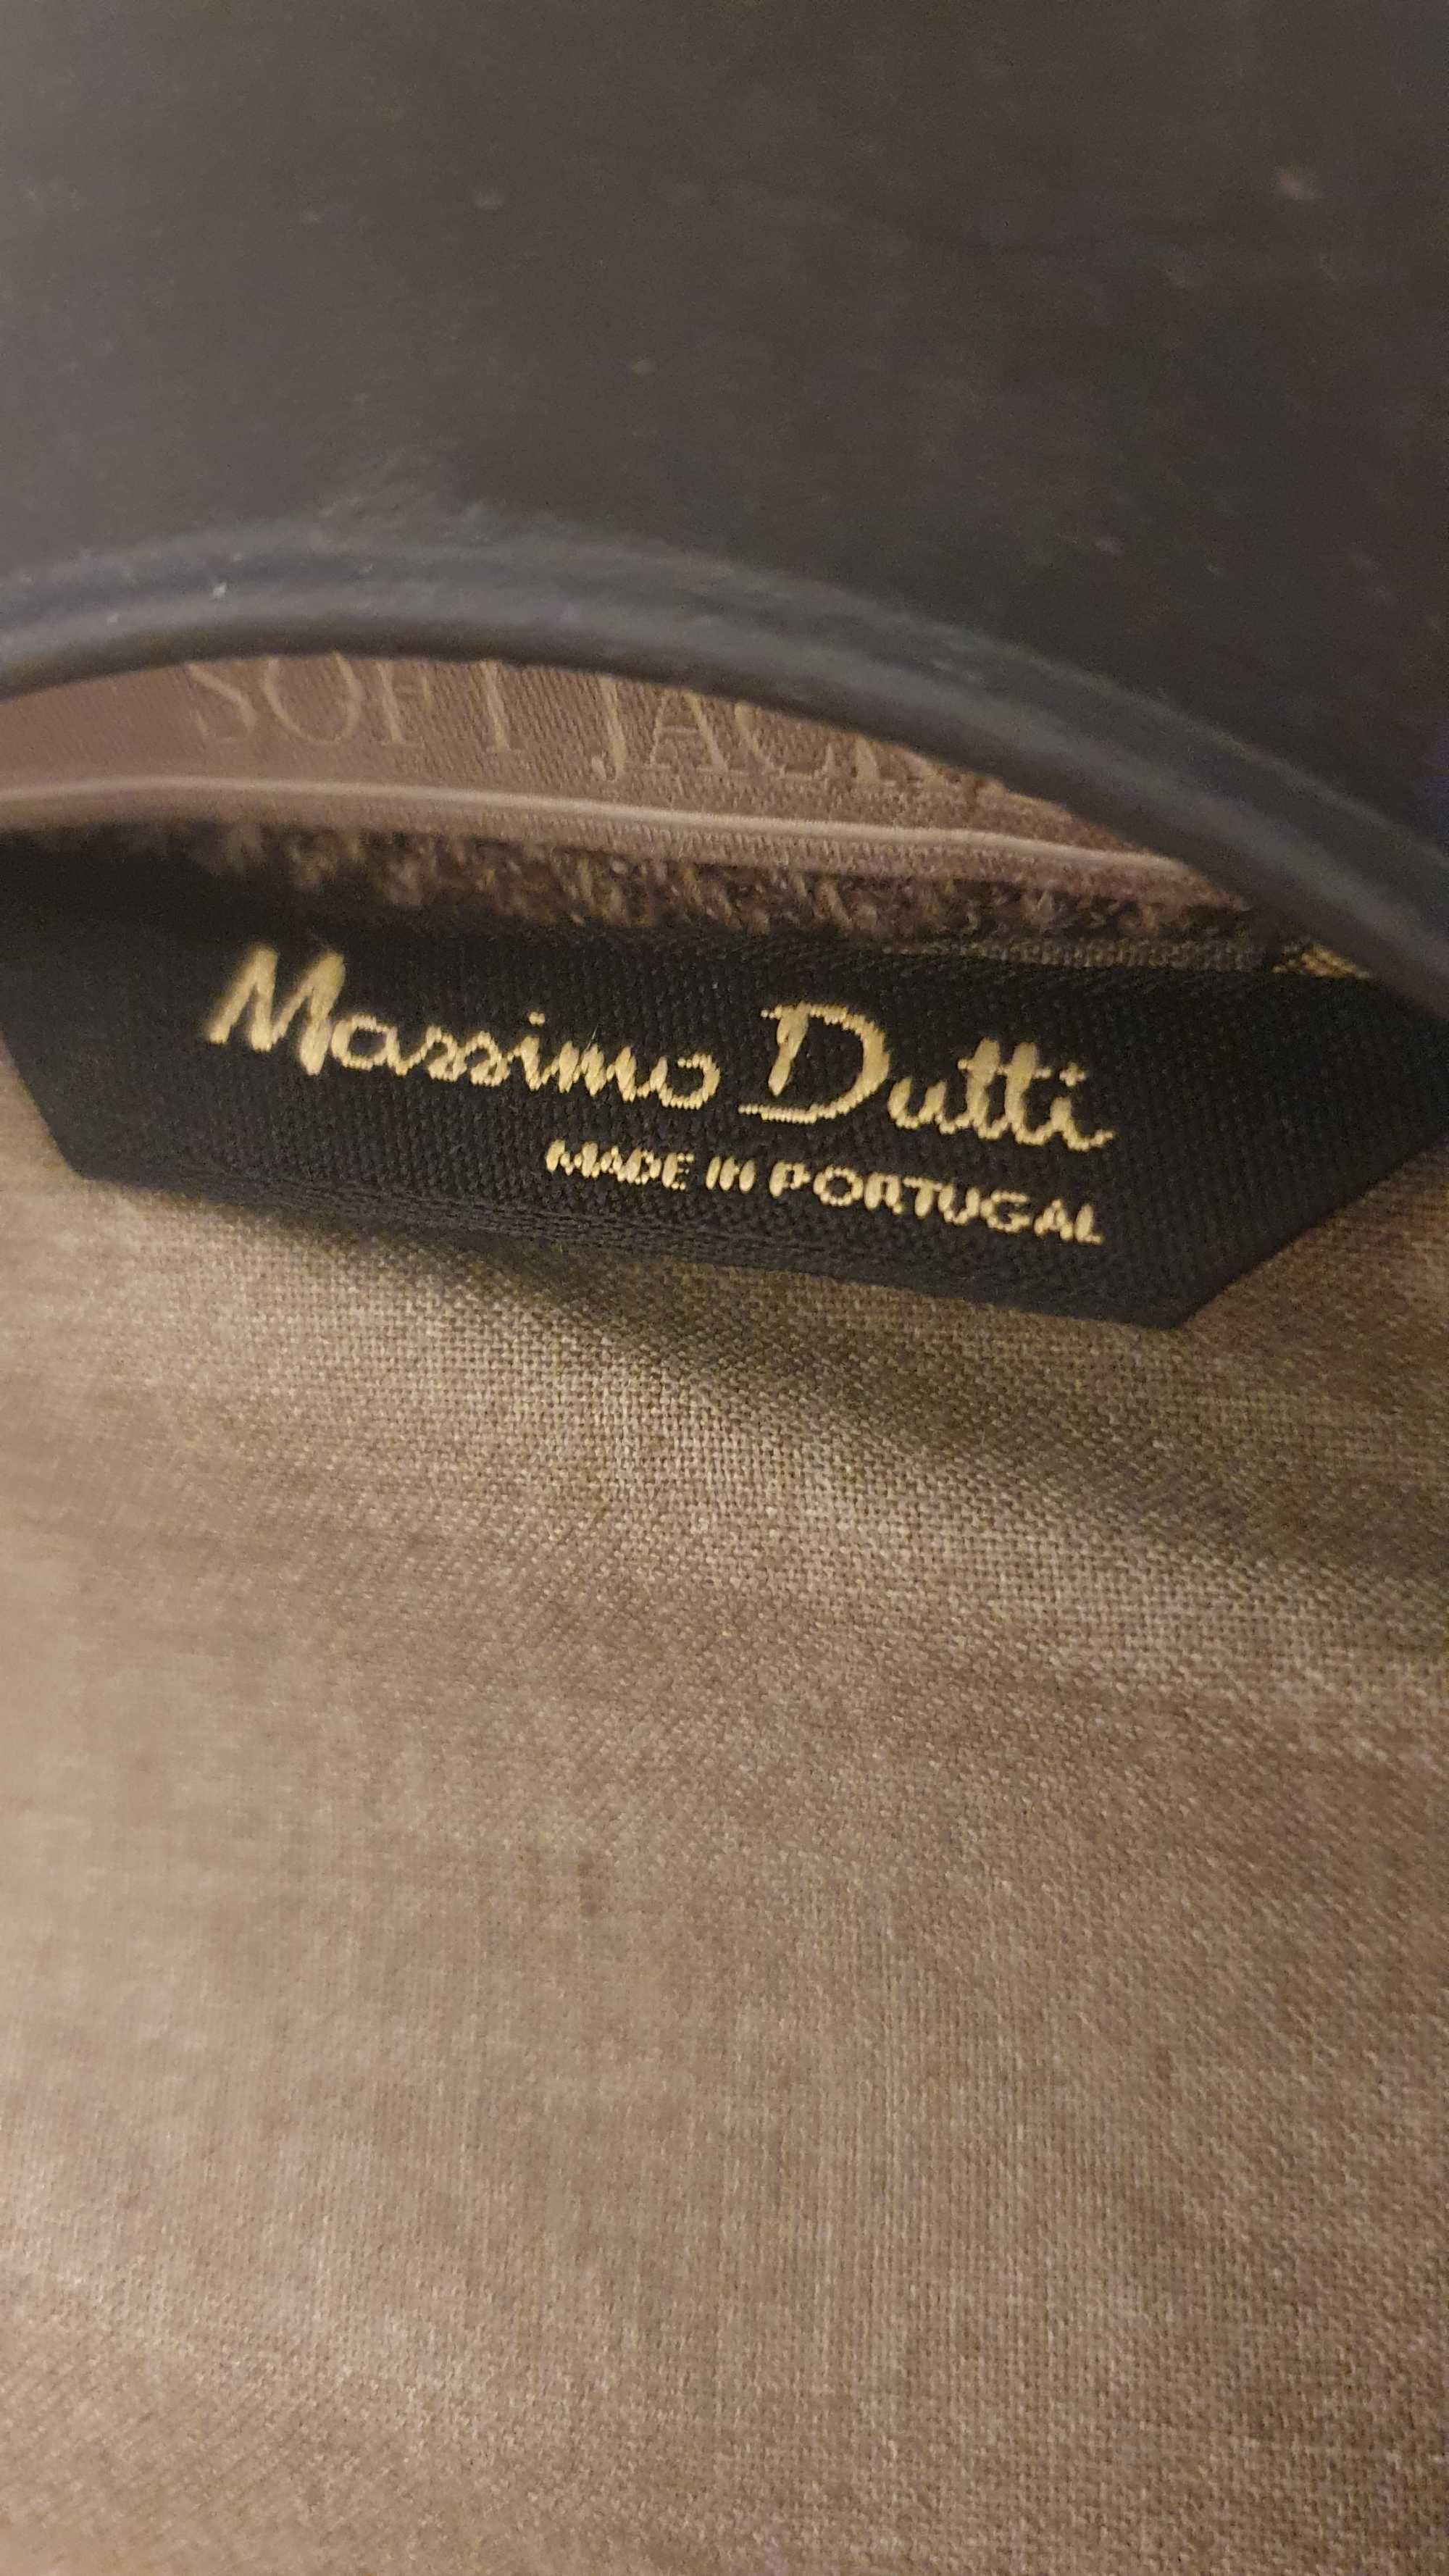 Massimo Dutti пиджак / шерсть